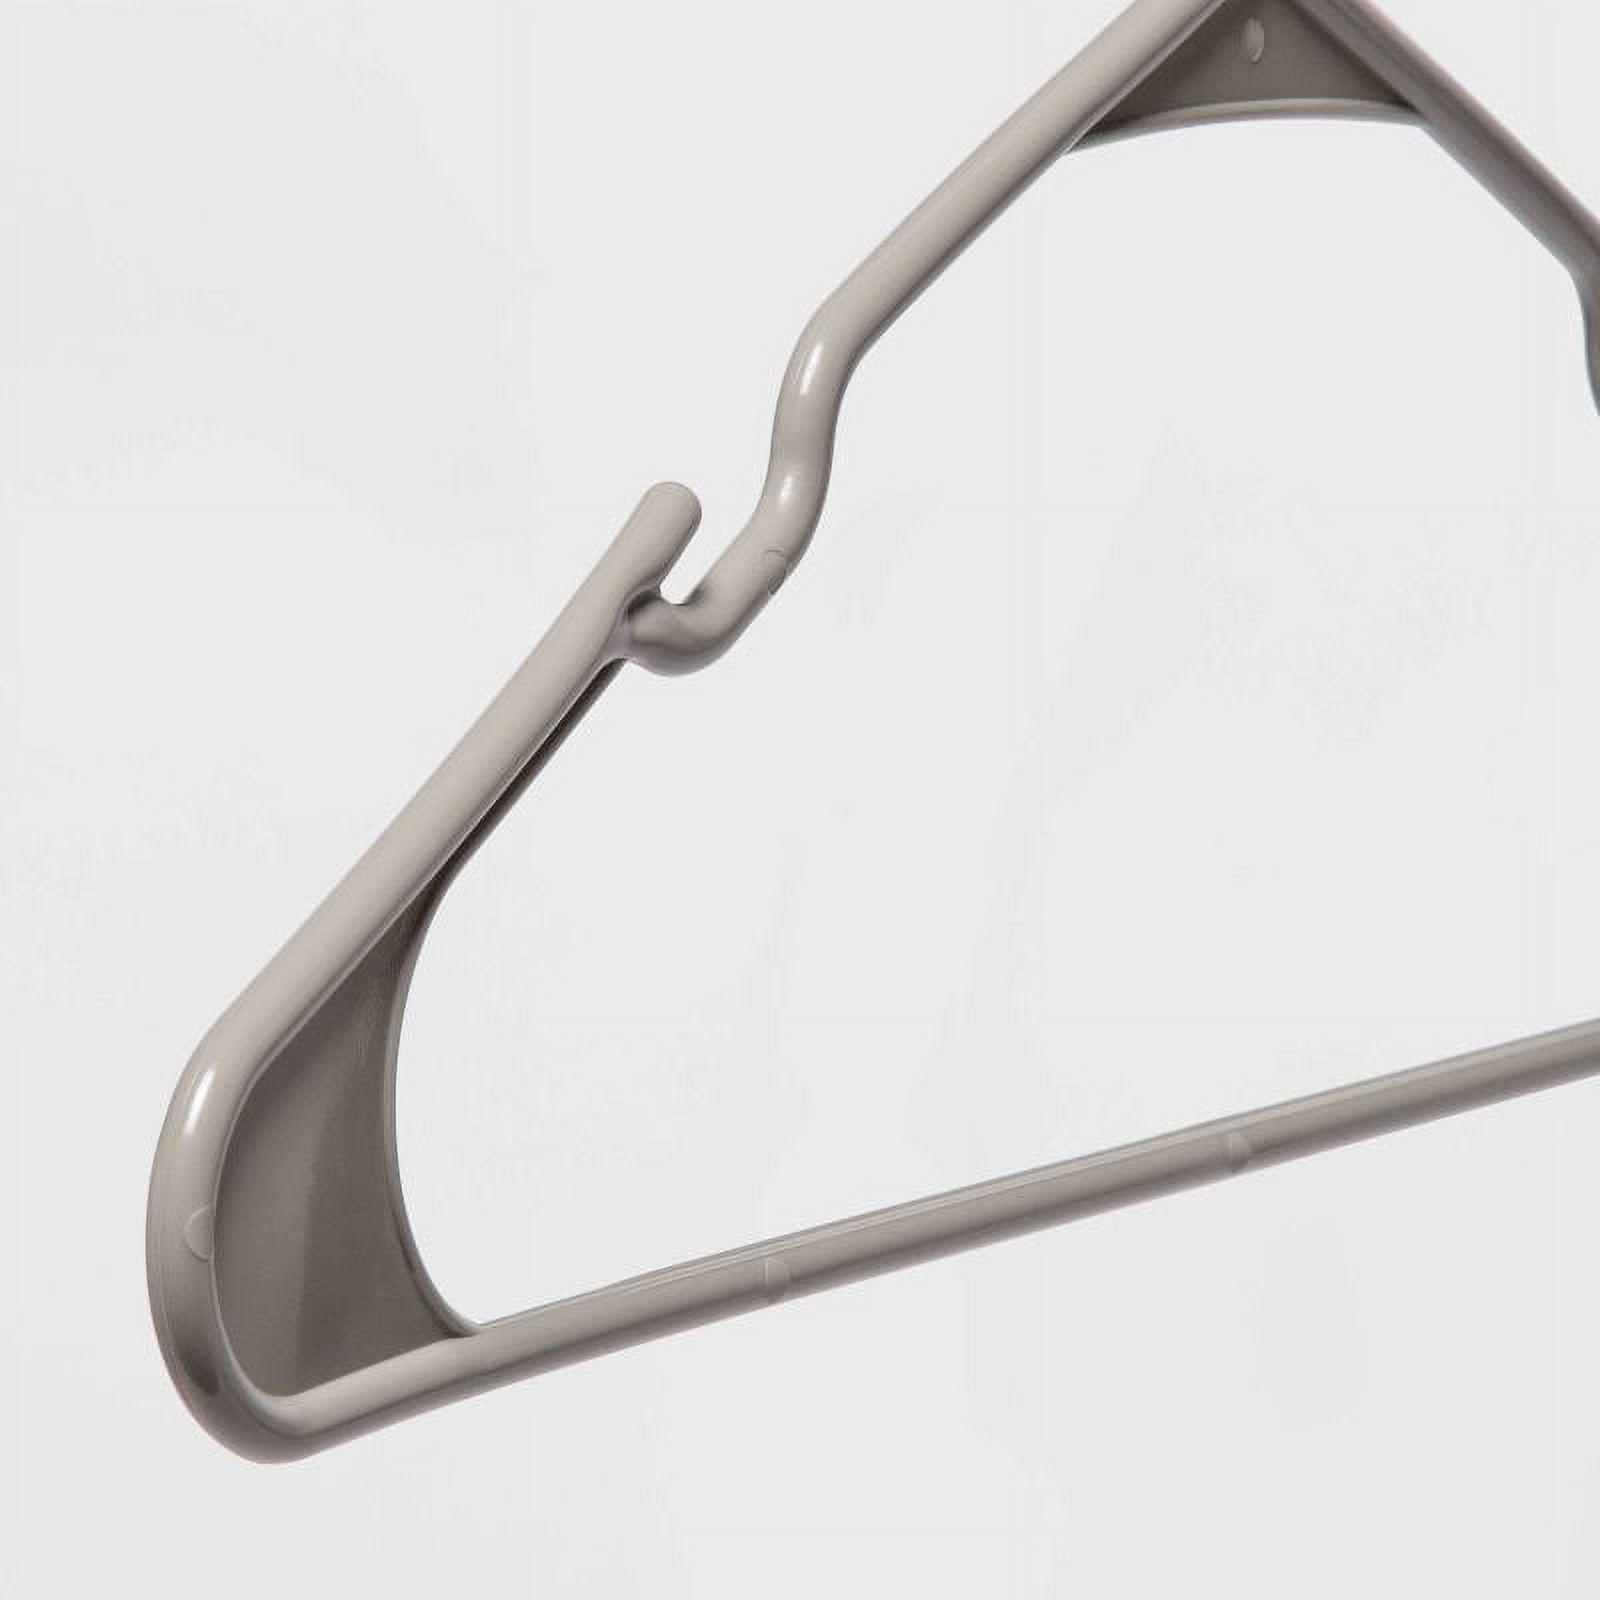 18pk Plastic Hangers White - Room Essentials™ : Target